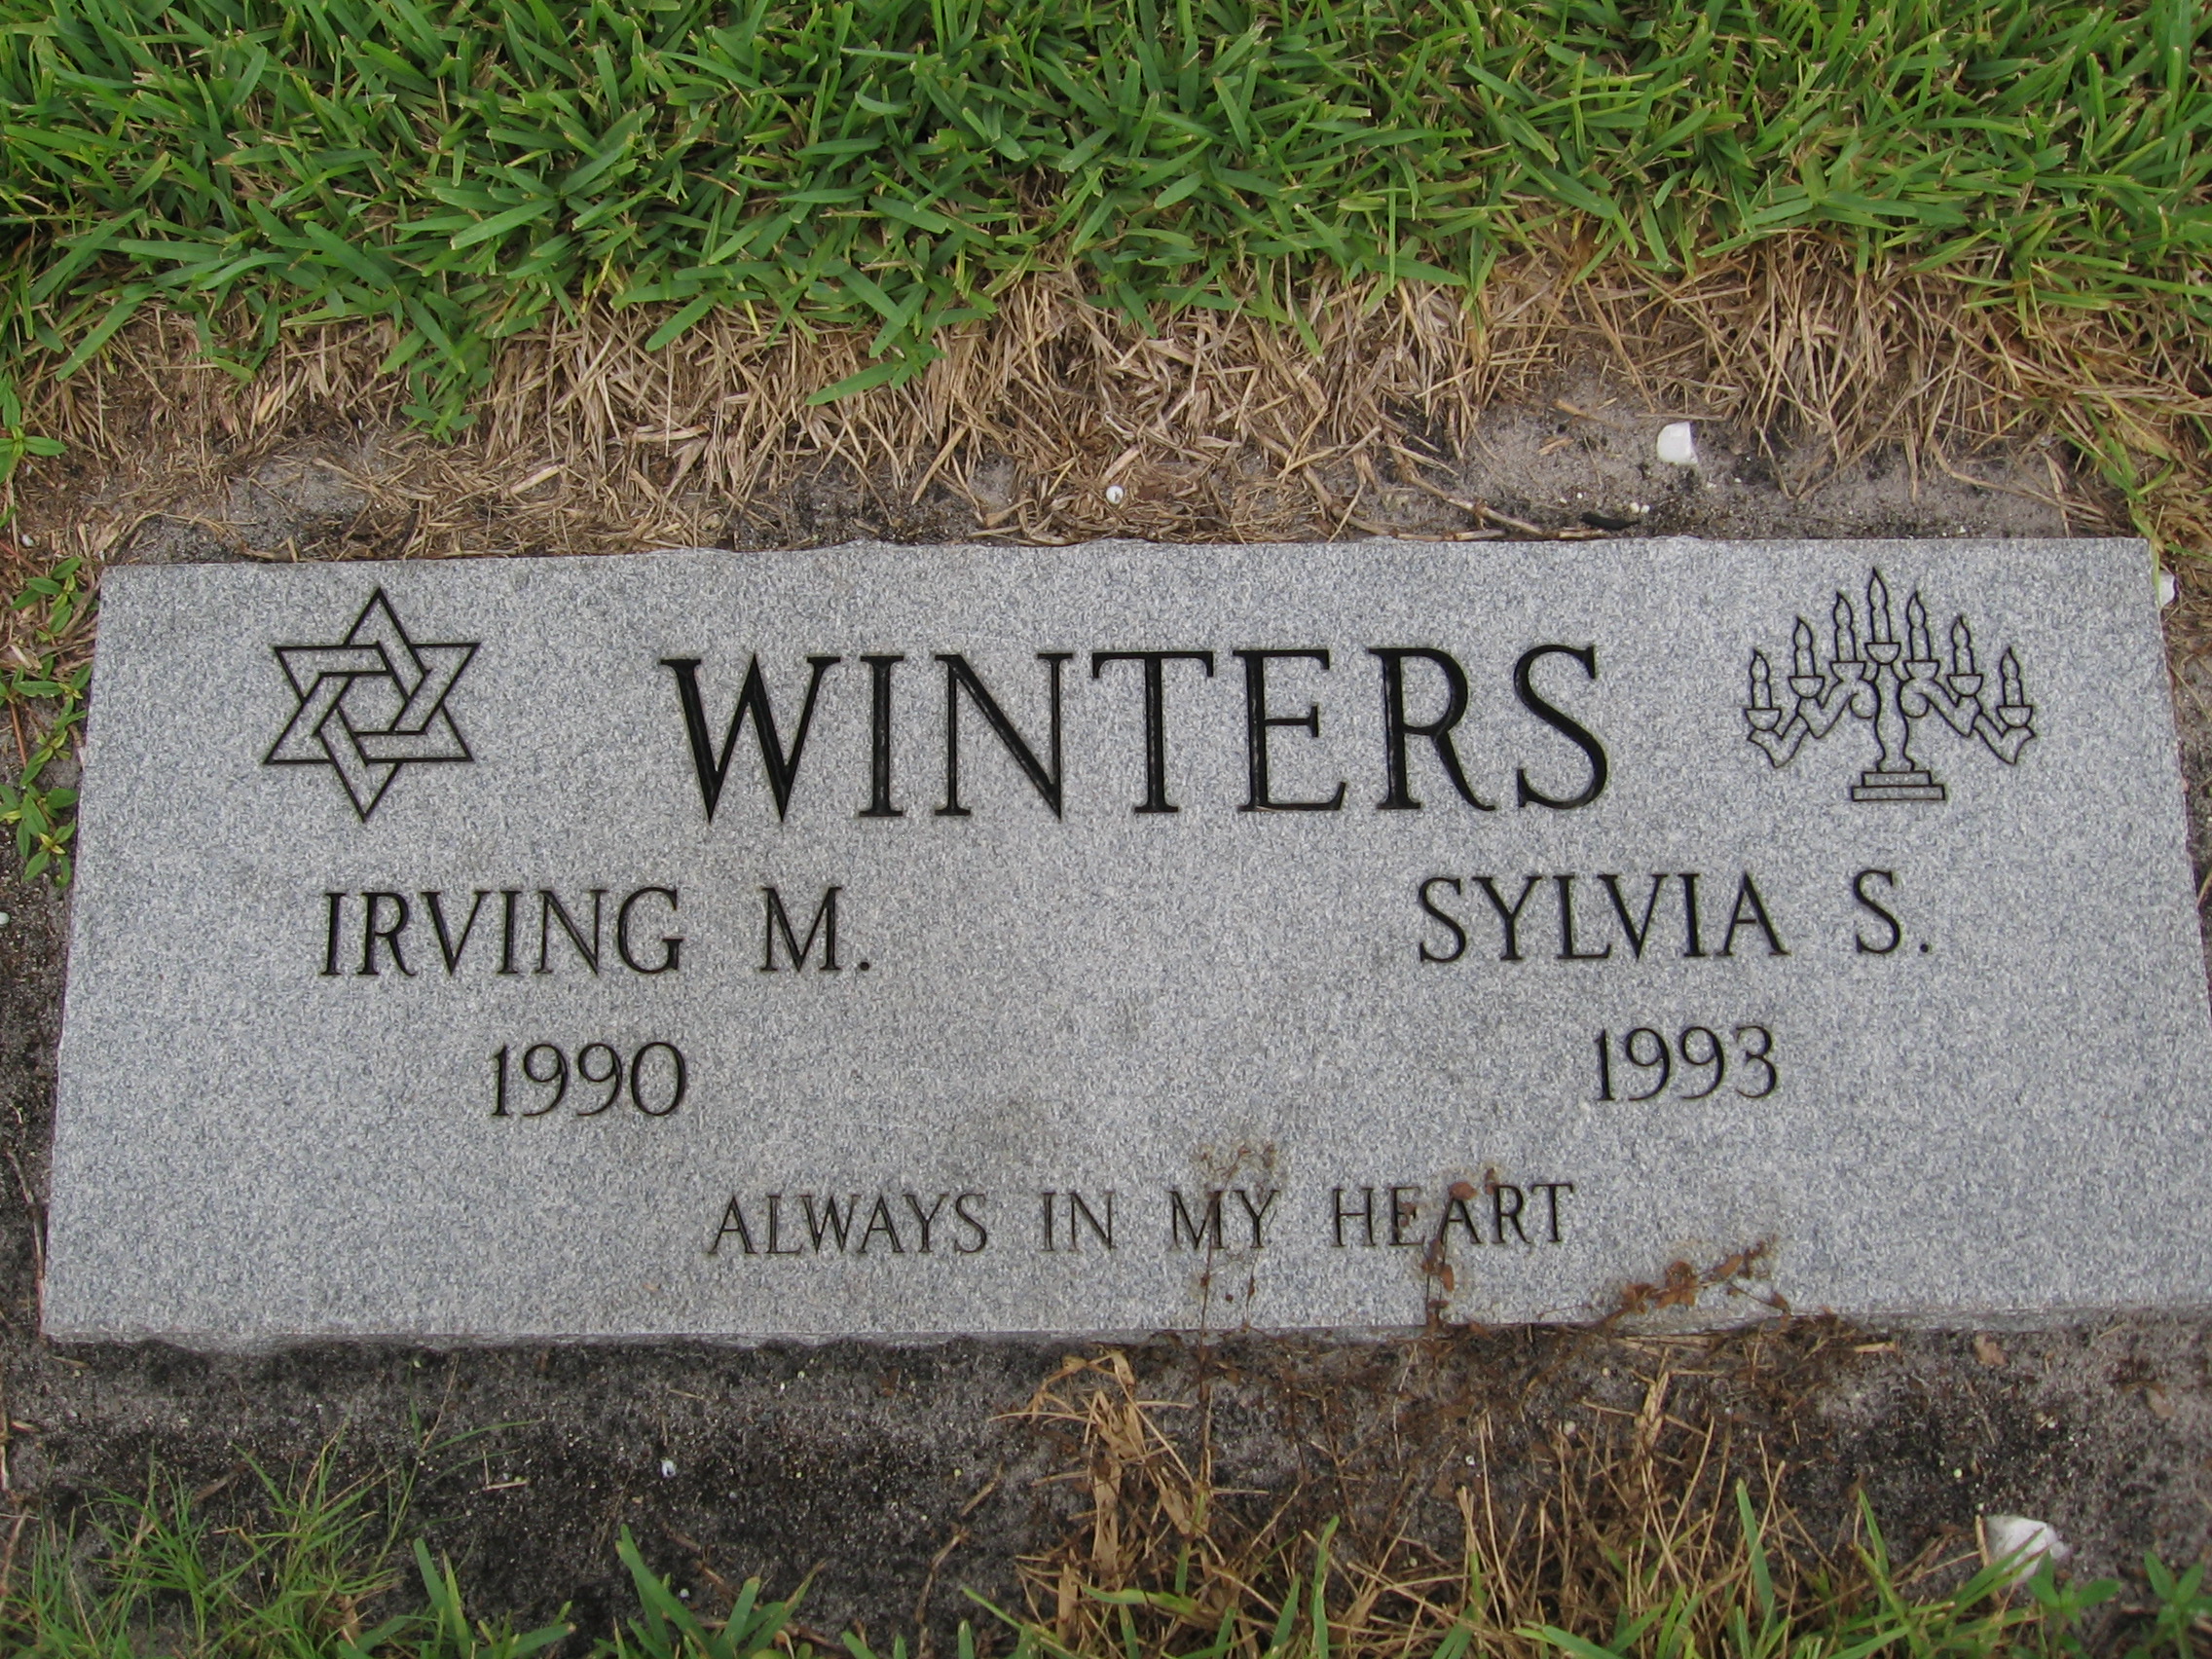 Irving M Winters